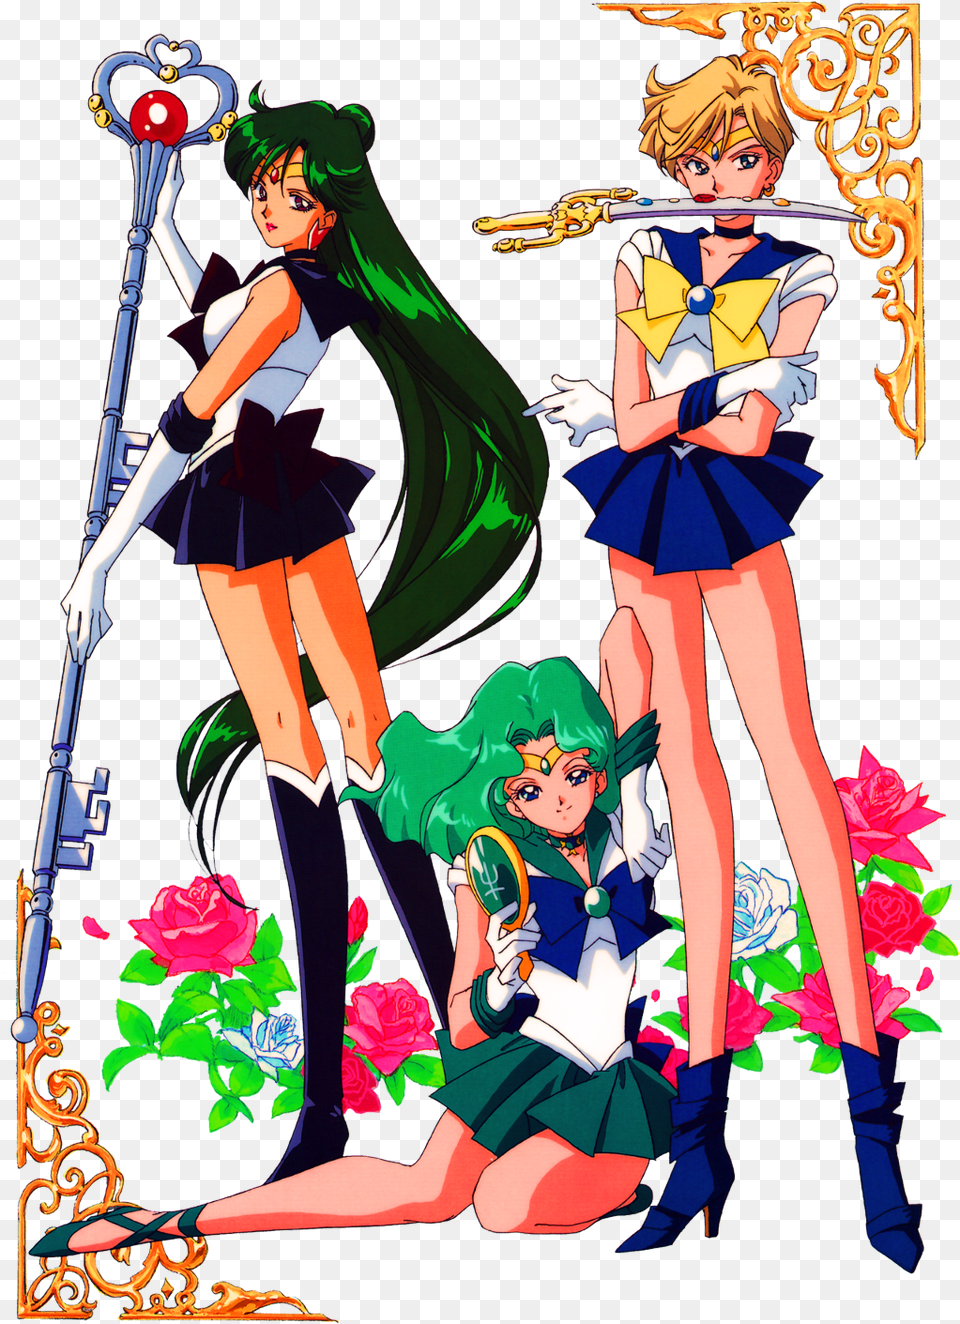 Sailormoon Sailorneptune Sailoruranus Sailorpluto Anime Sailor Moon Sailor Uranus, Publication, Book, Comics, Adult Png